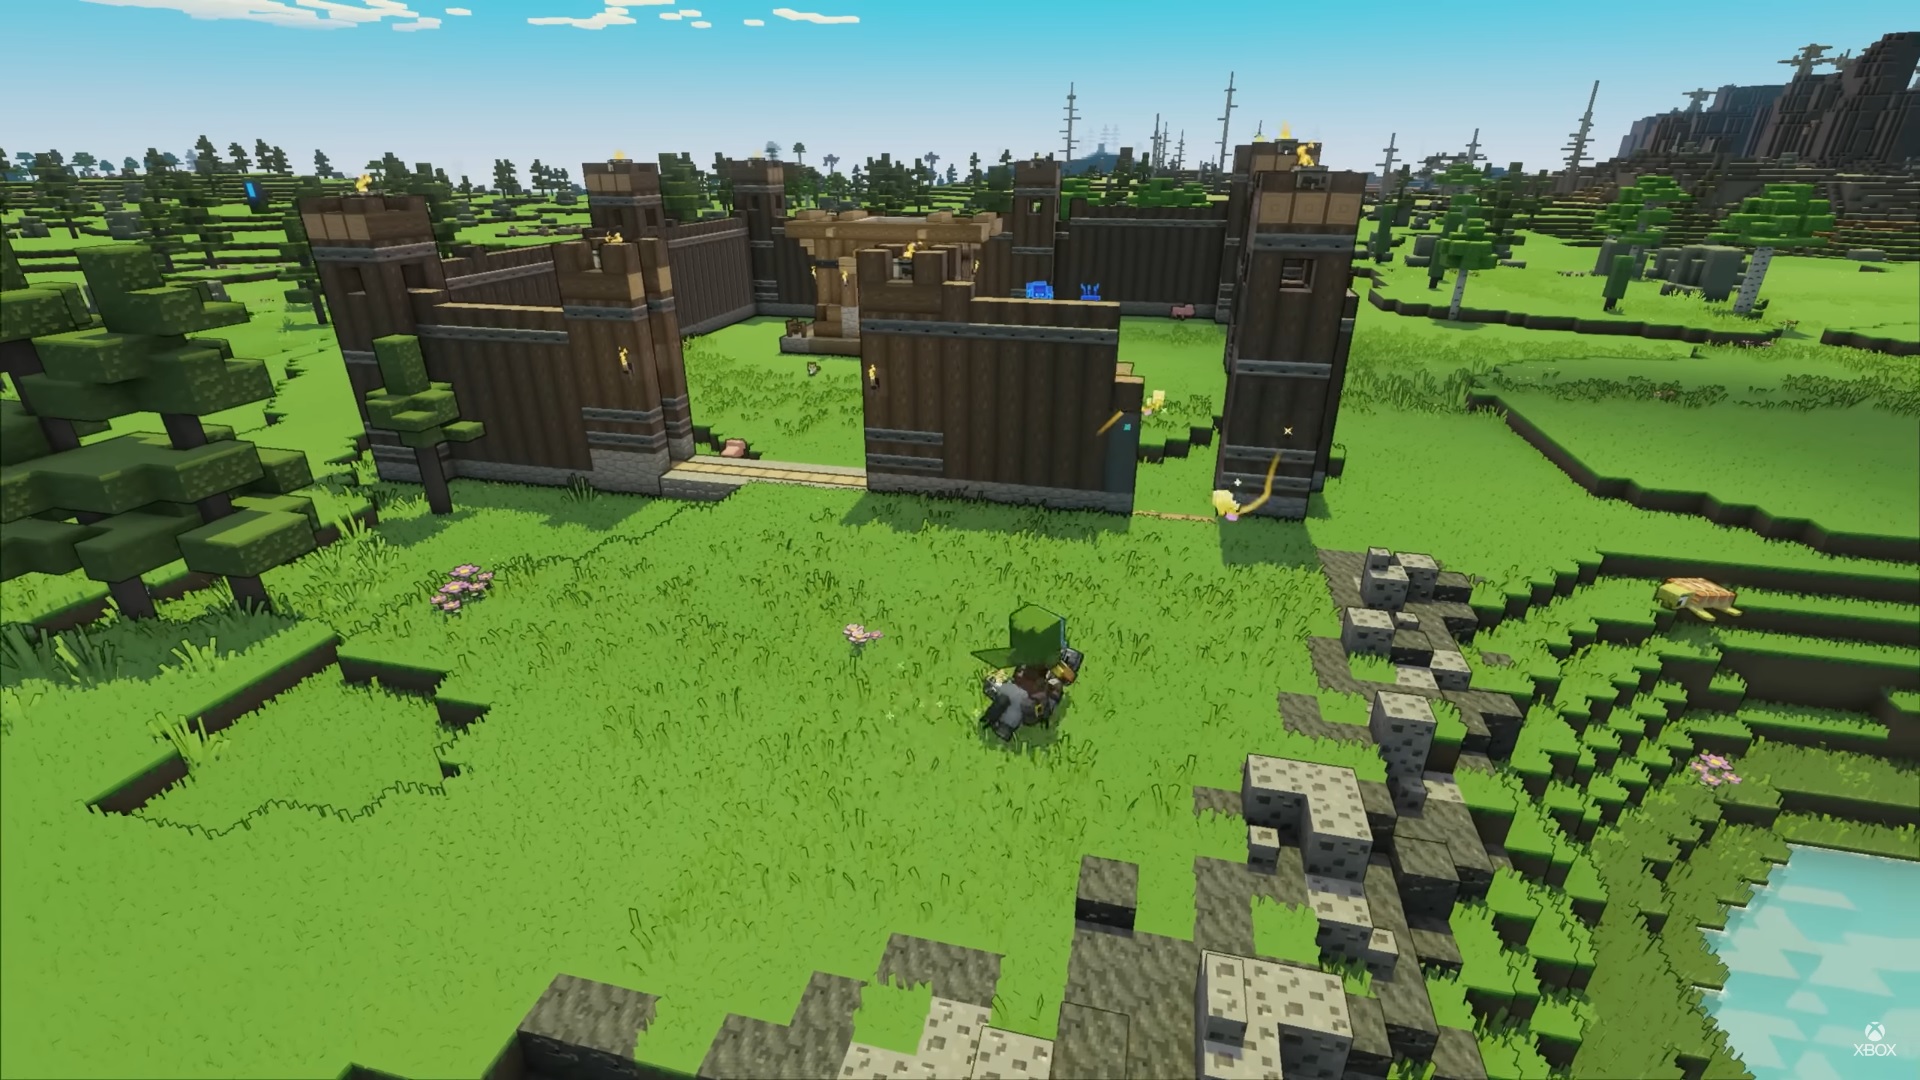 Minecraft Legends - A player on horseback in a grassy plain watches an oak log fort being built.